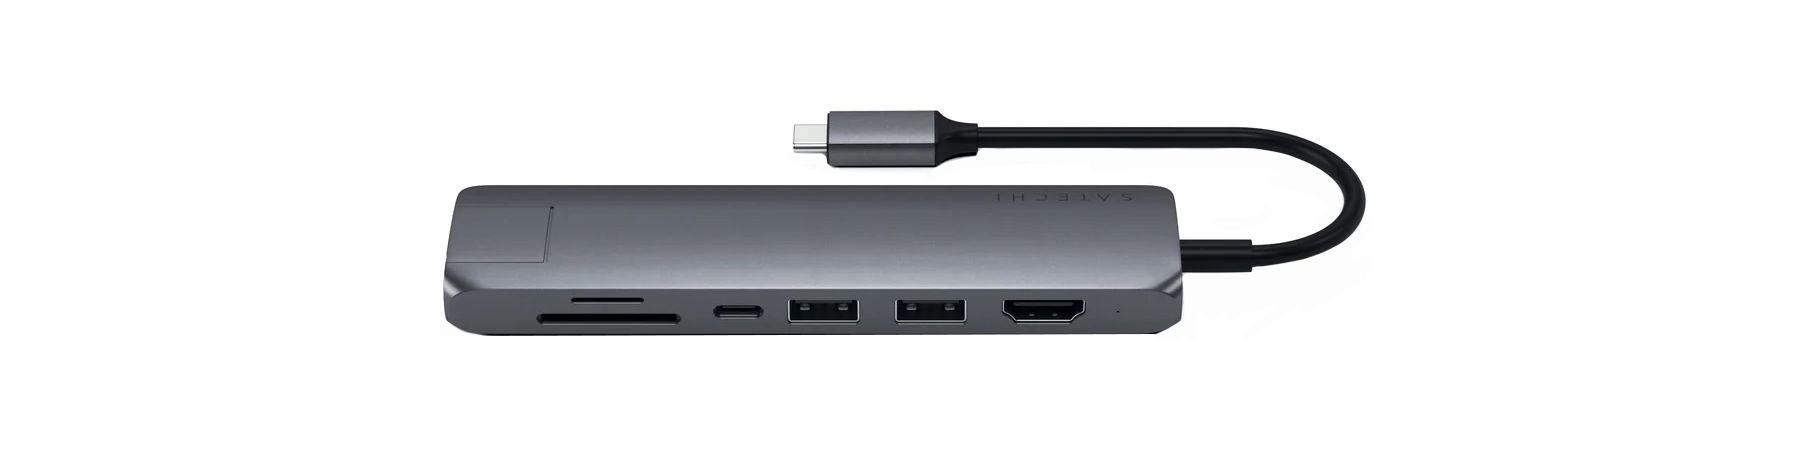 USB-хаб Satechi Aluminum Multi-Port Adapter with Ethernet Type-C Space Gray, изображение 6